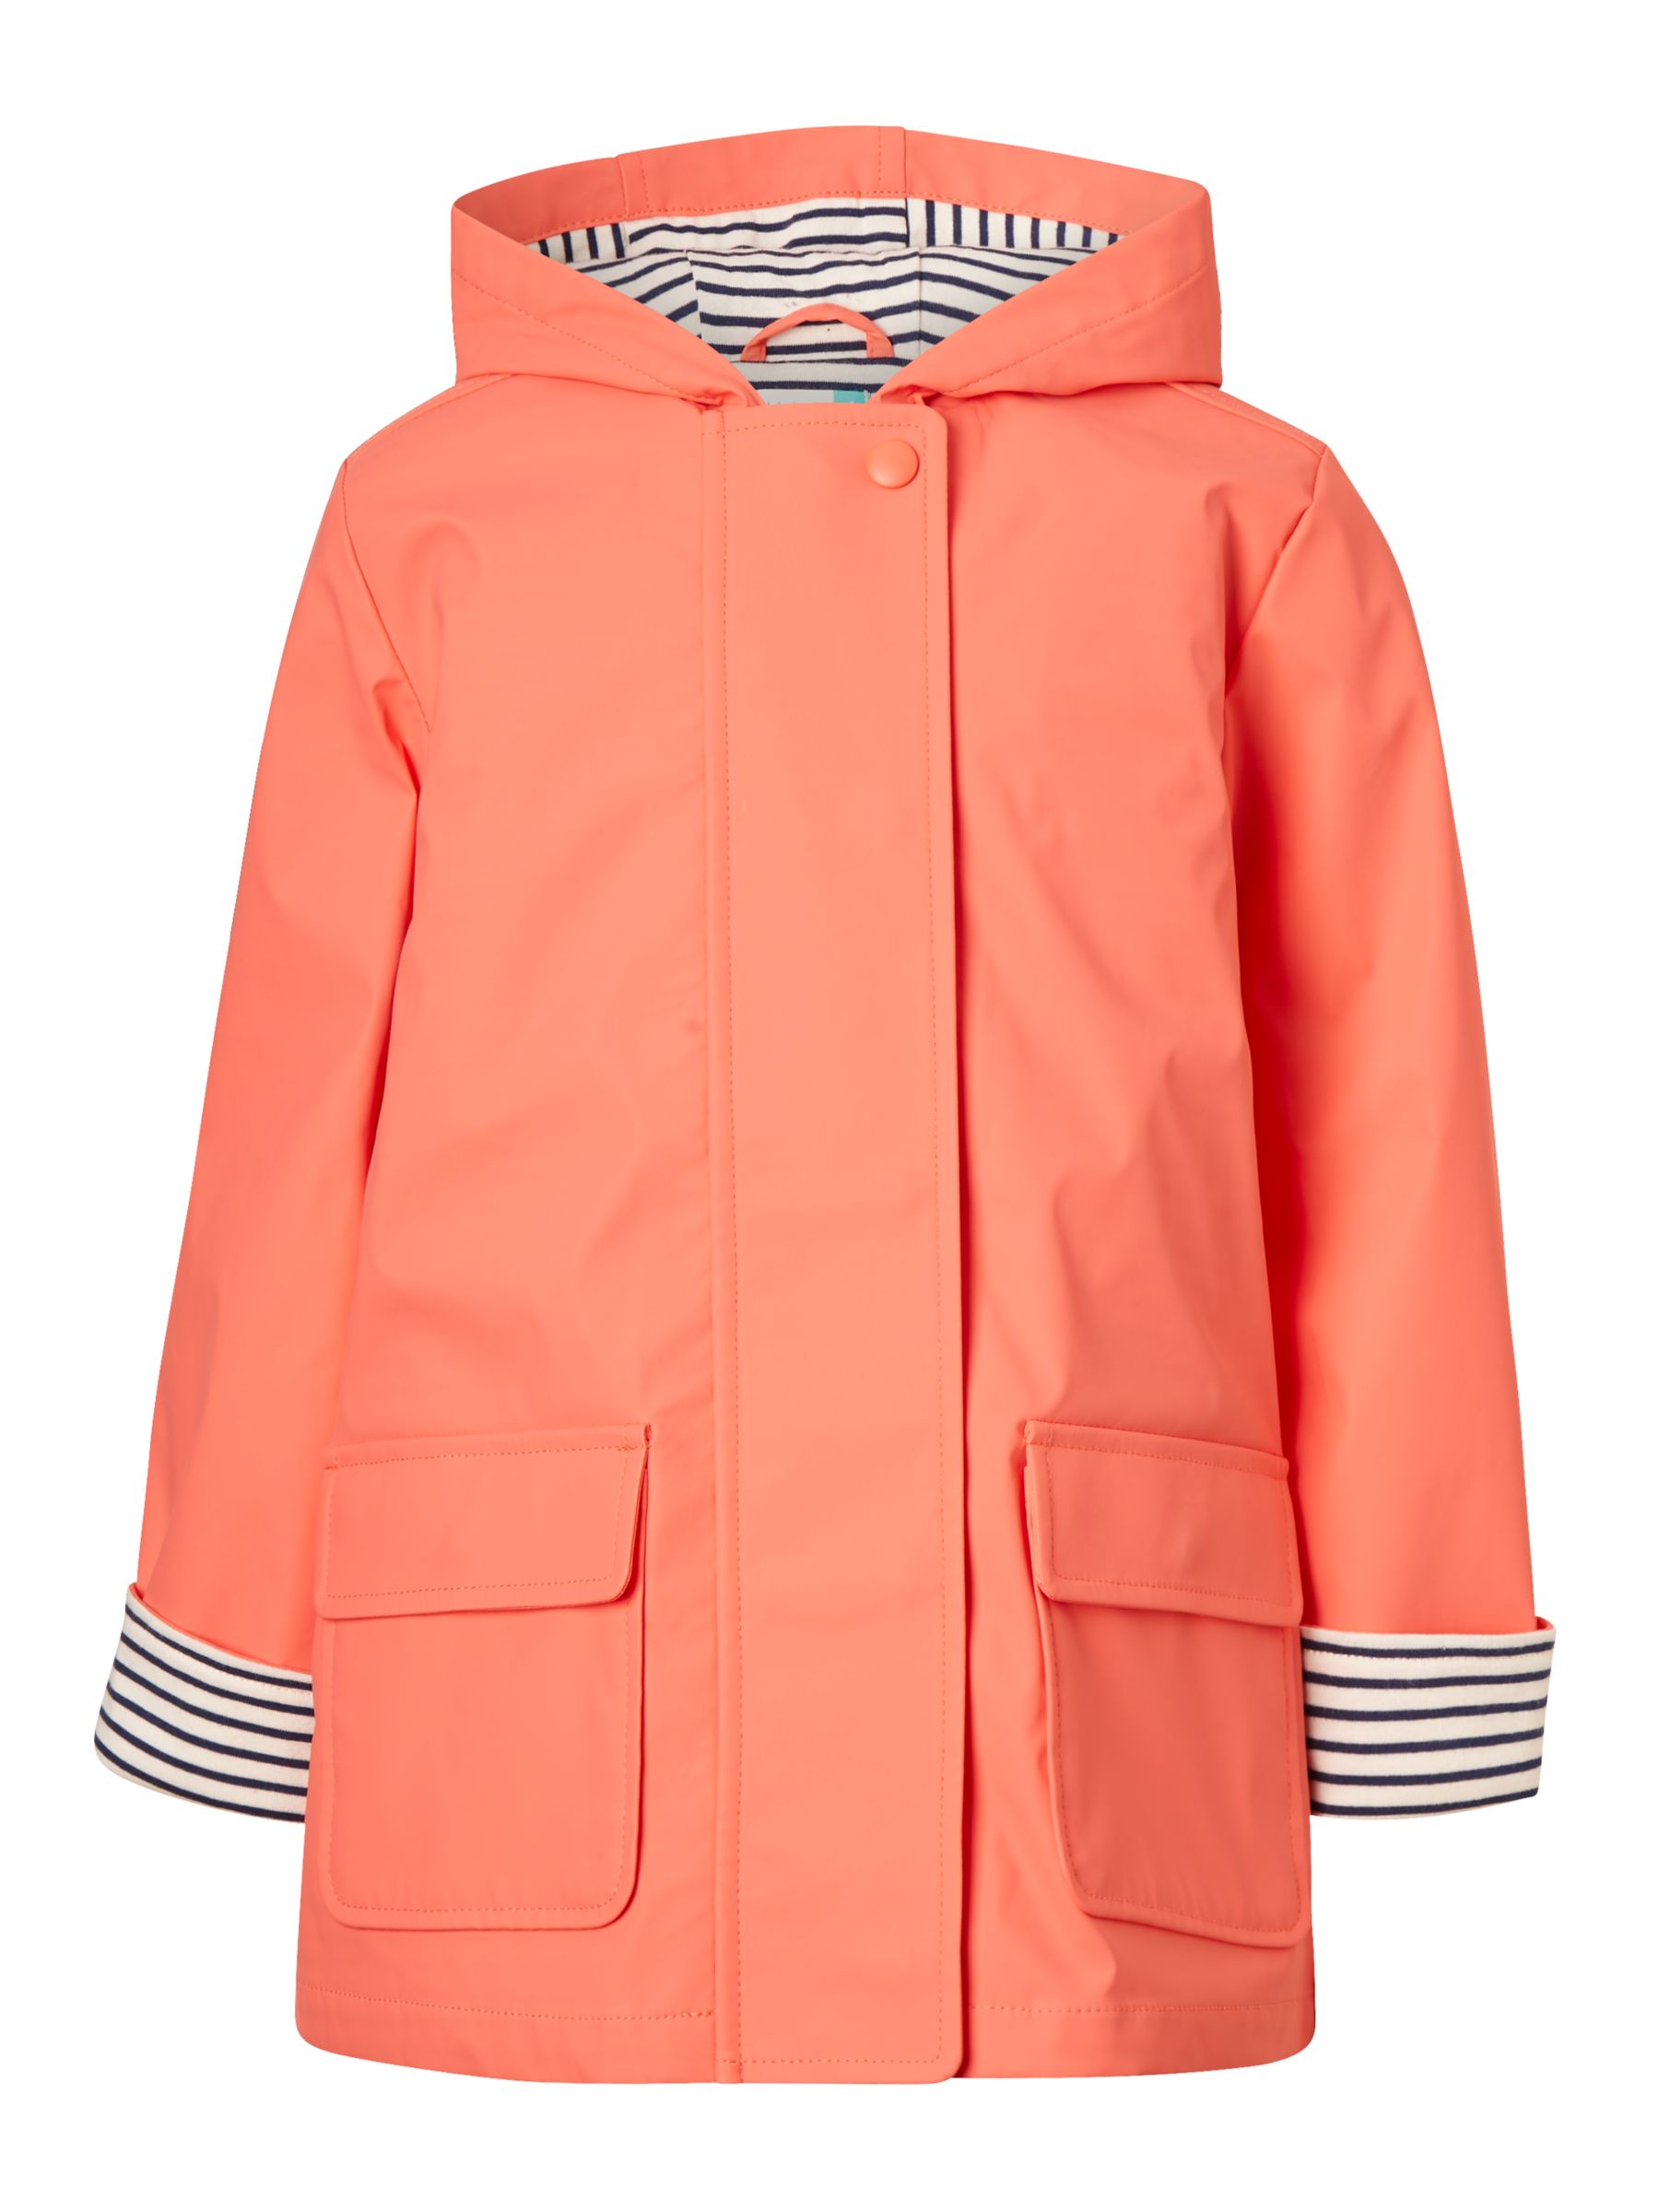 Taiduosheng Age 6~12 Kids Hooded Jacket Girls Rain Raincoat Cover Long Boys Rainwear 